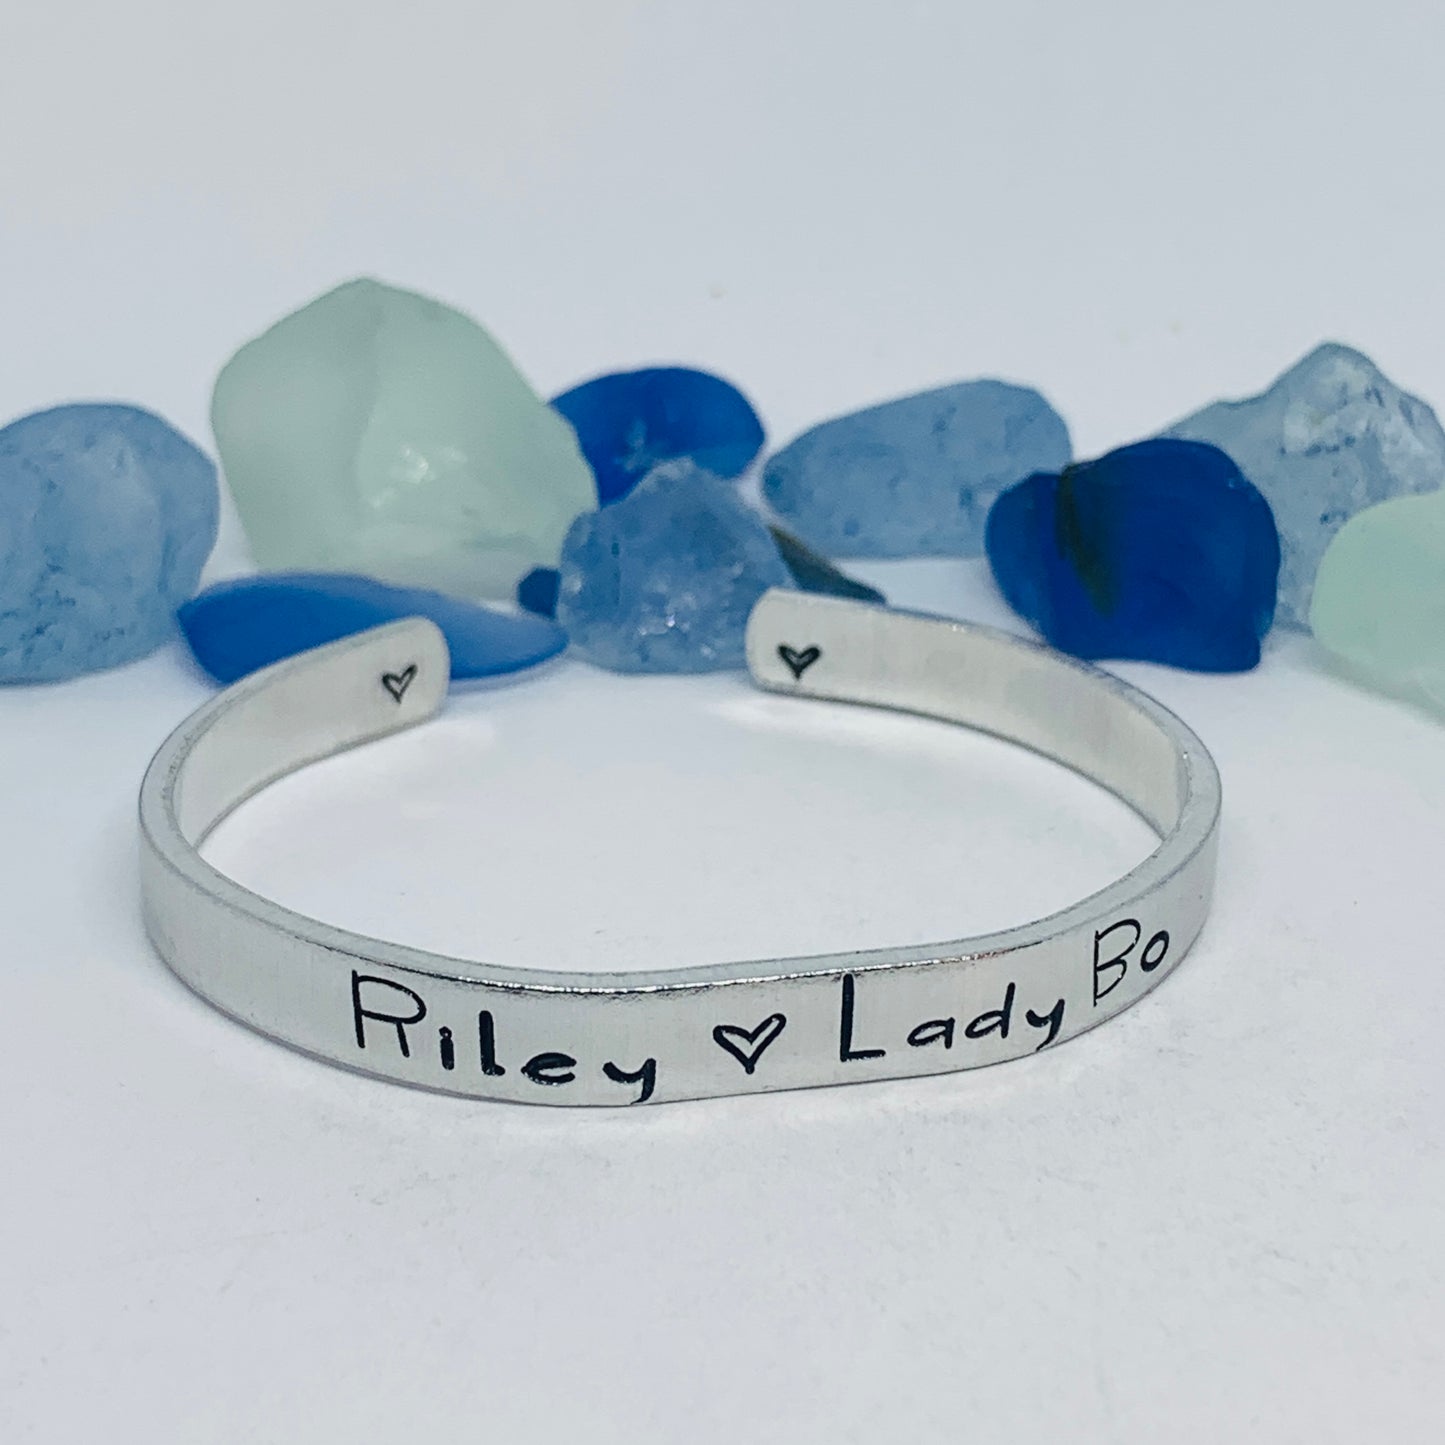 Custom Order for Paula B - Hand Stamped Metal Cuff Bracelet | Pet Loss Cuff Bracelets | Jester | Riley & Lady Bo